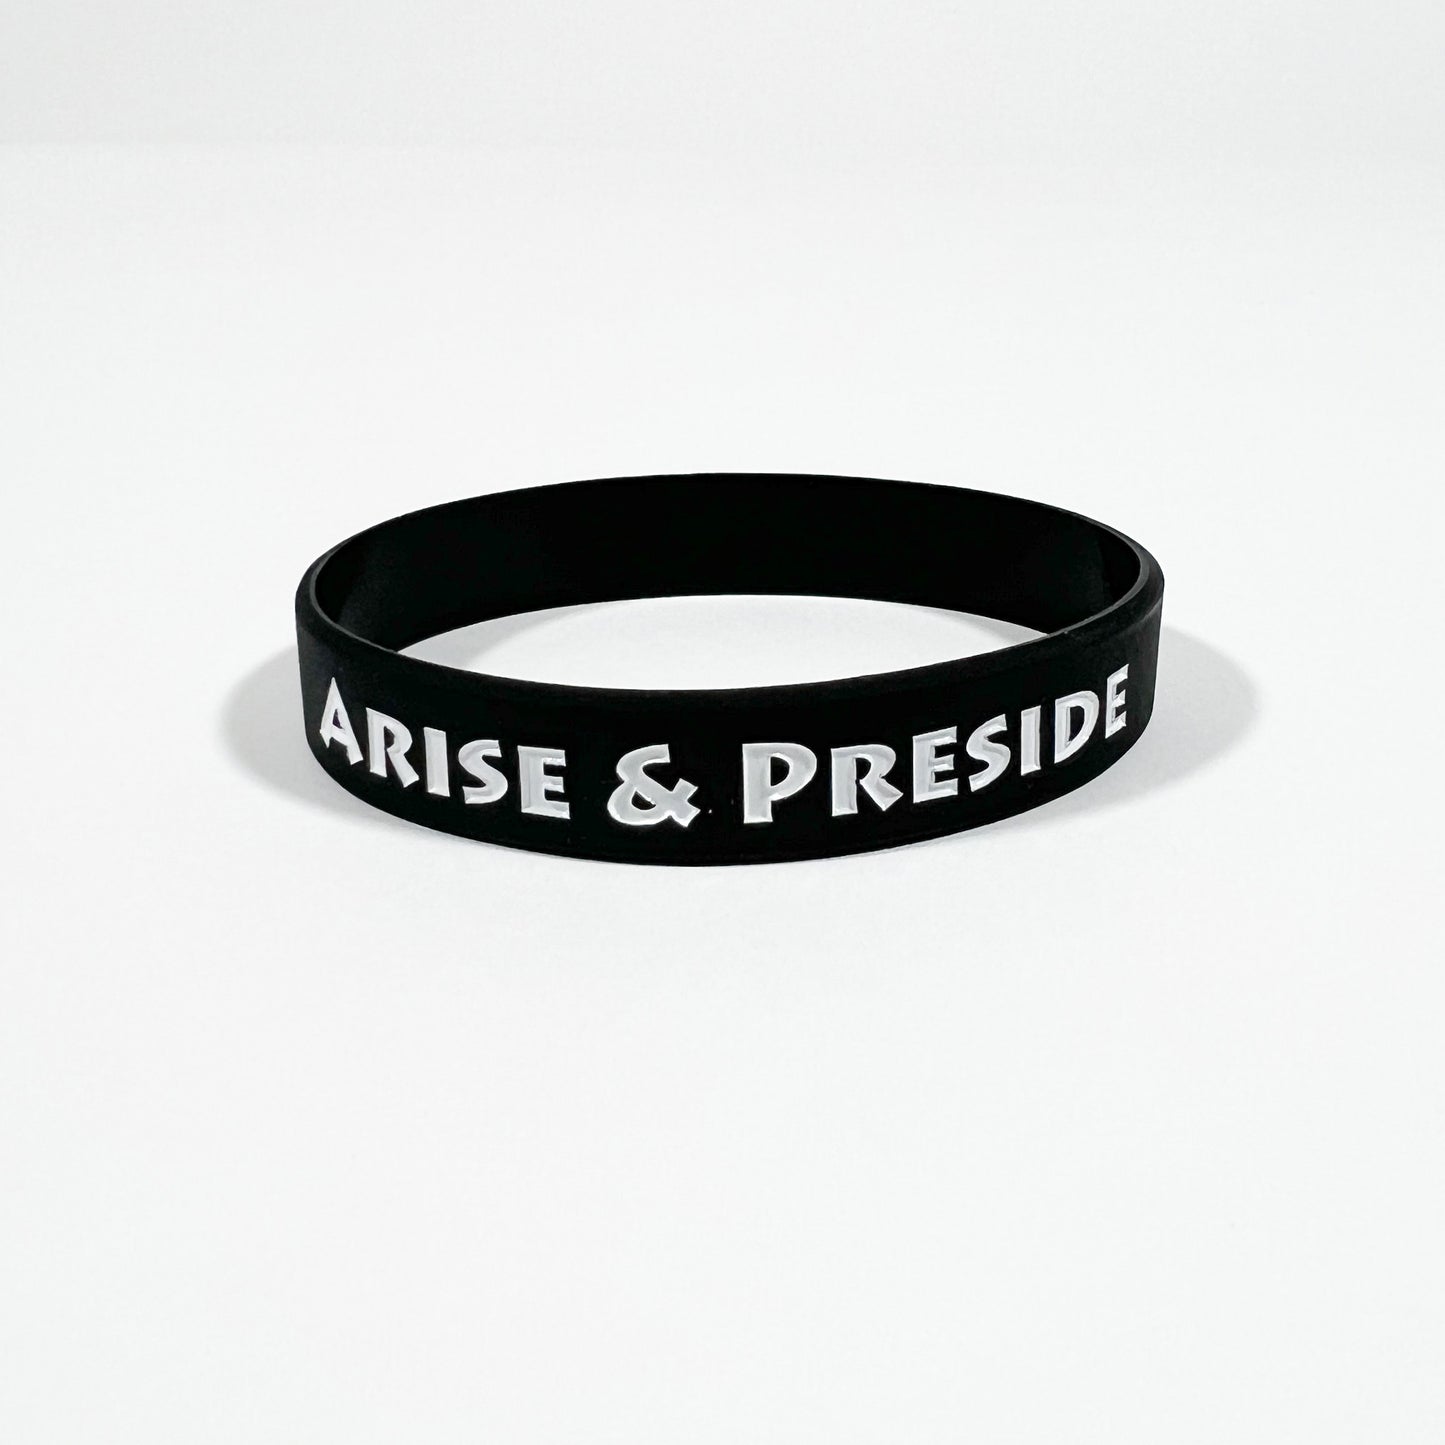 Arise & Preside Wristband